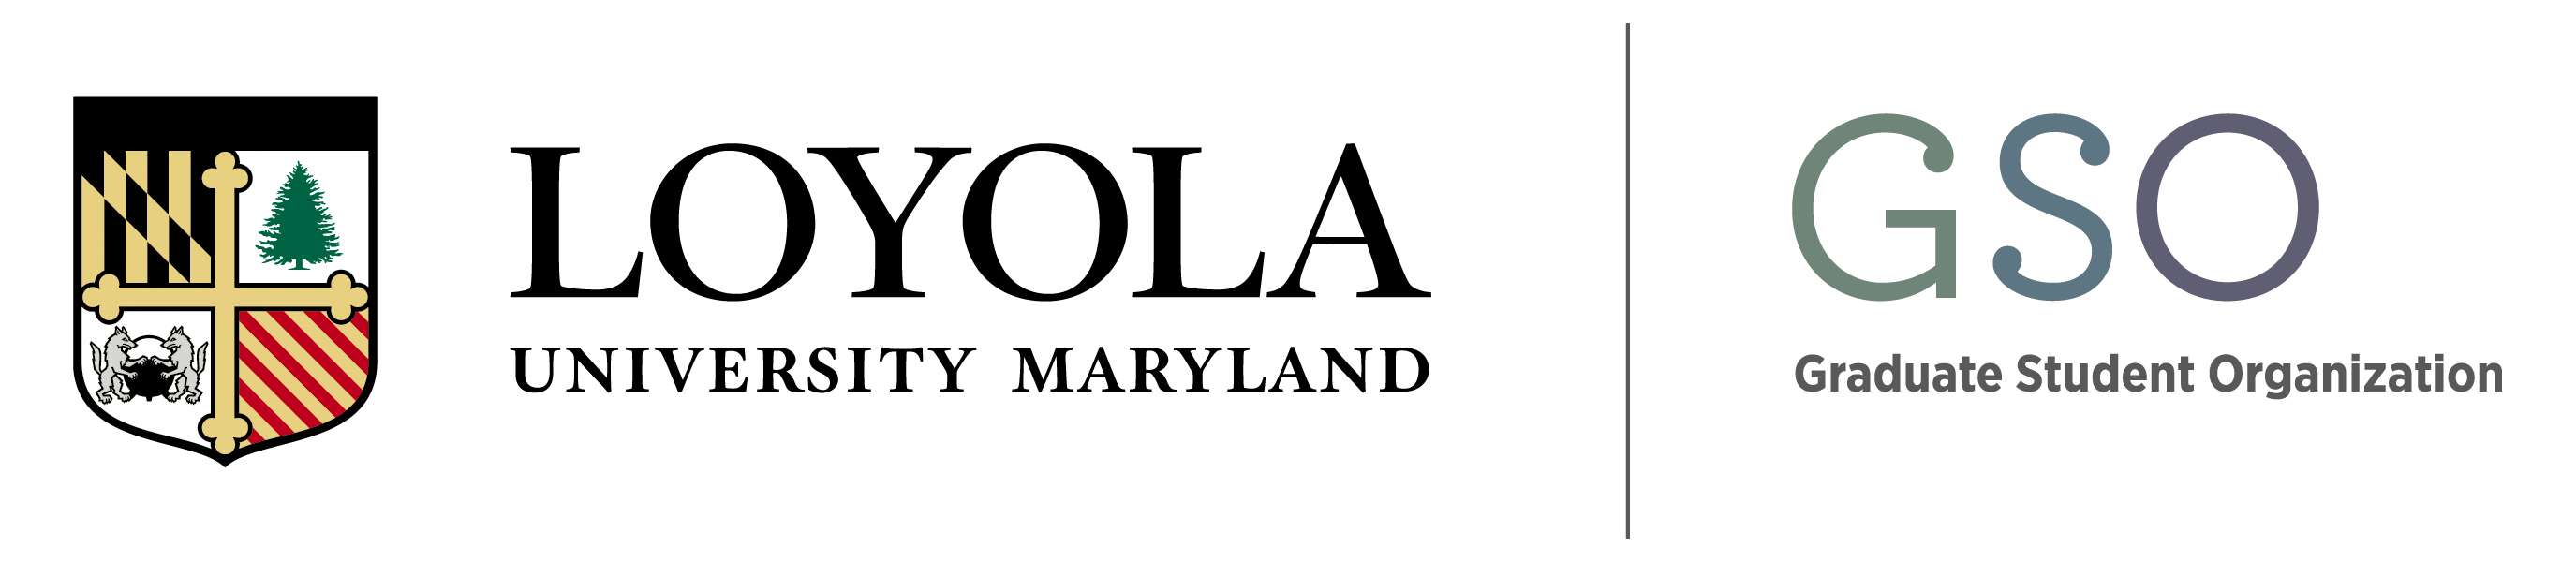 Loyola University and Graduate Student Organization logos